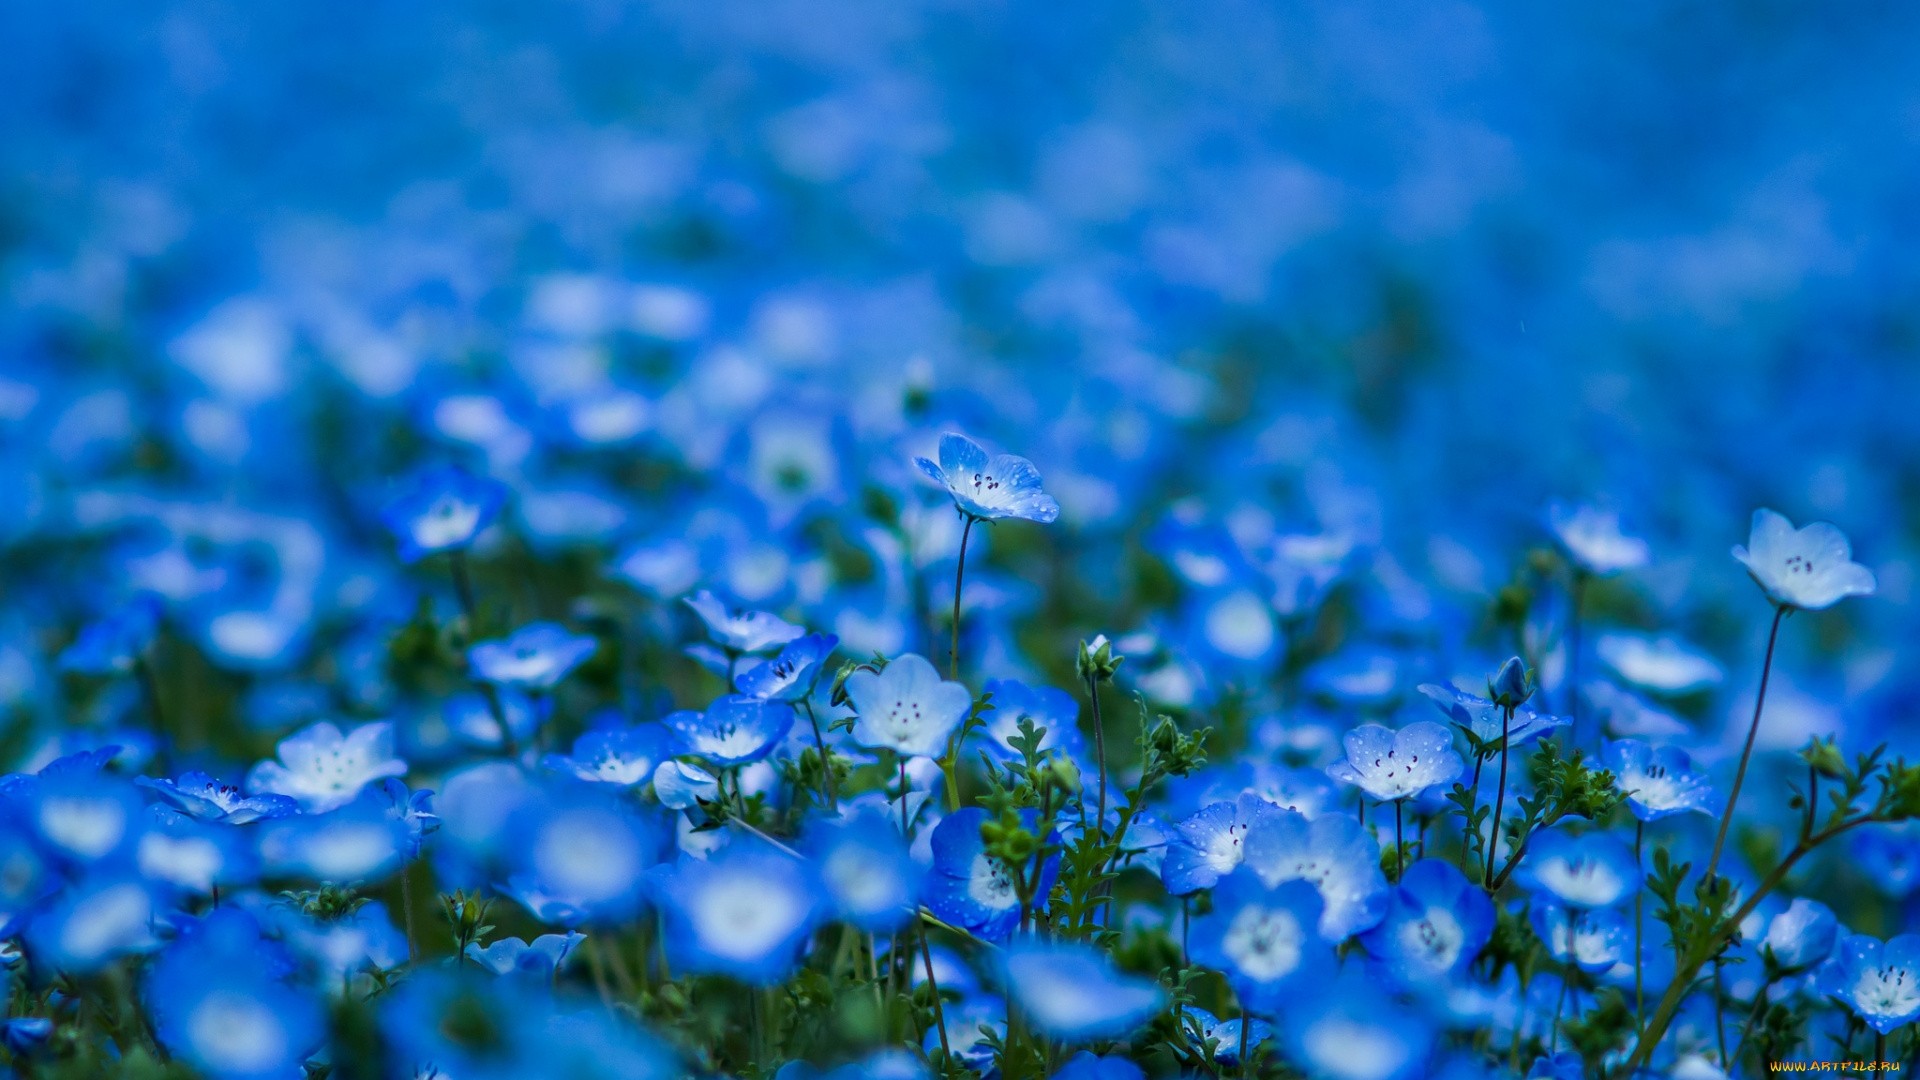 Blue Flower hd wallpaper download